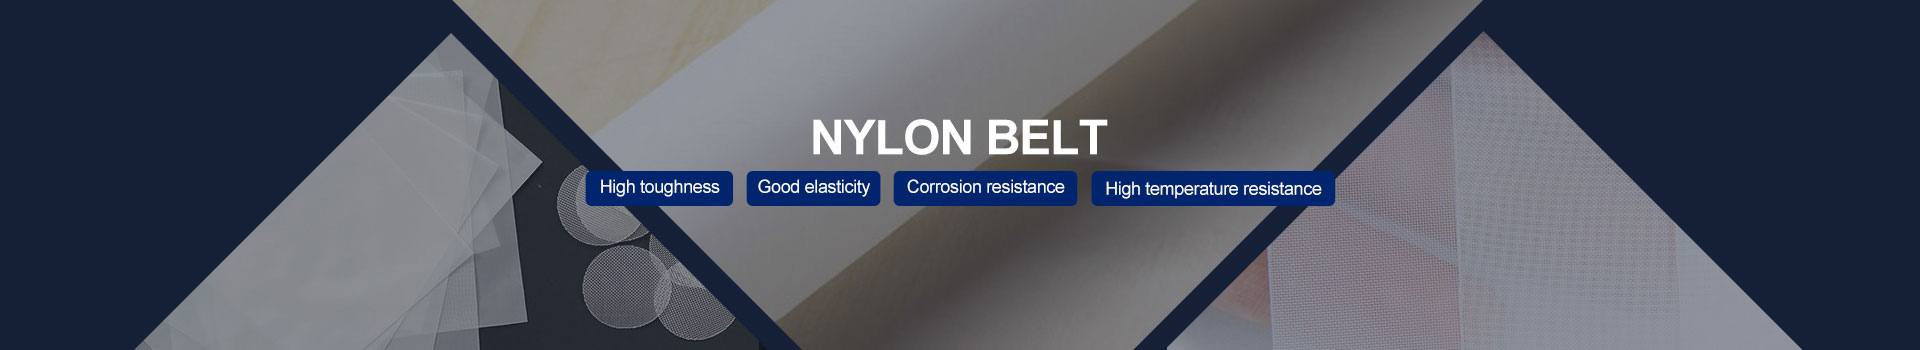 Cinturón de nylon